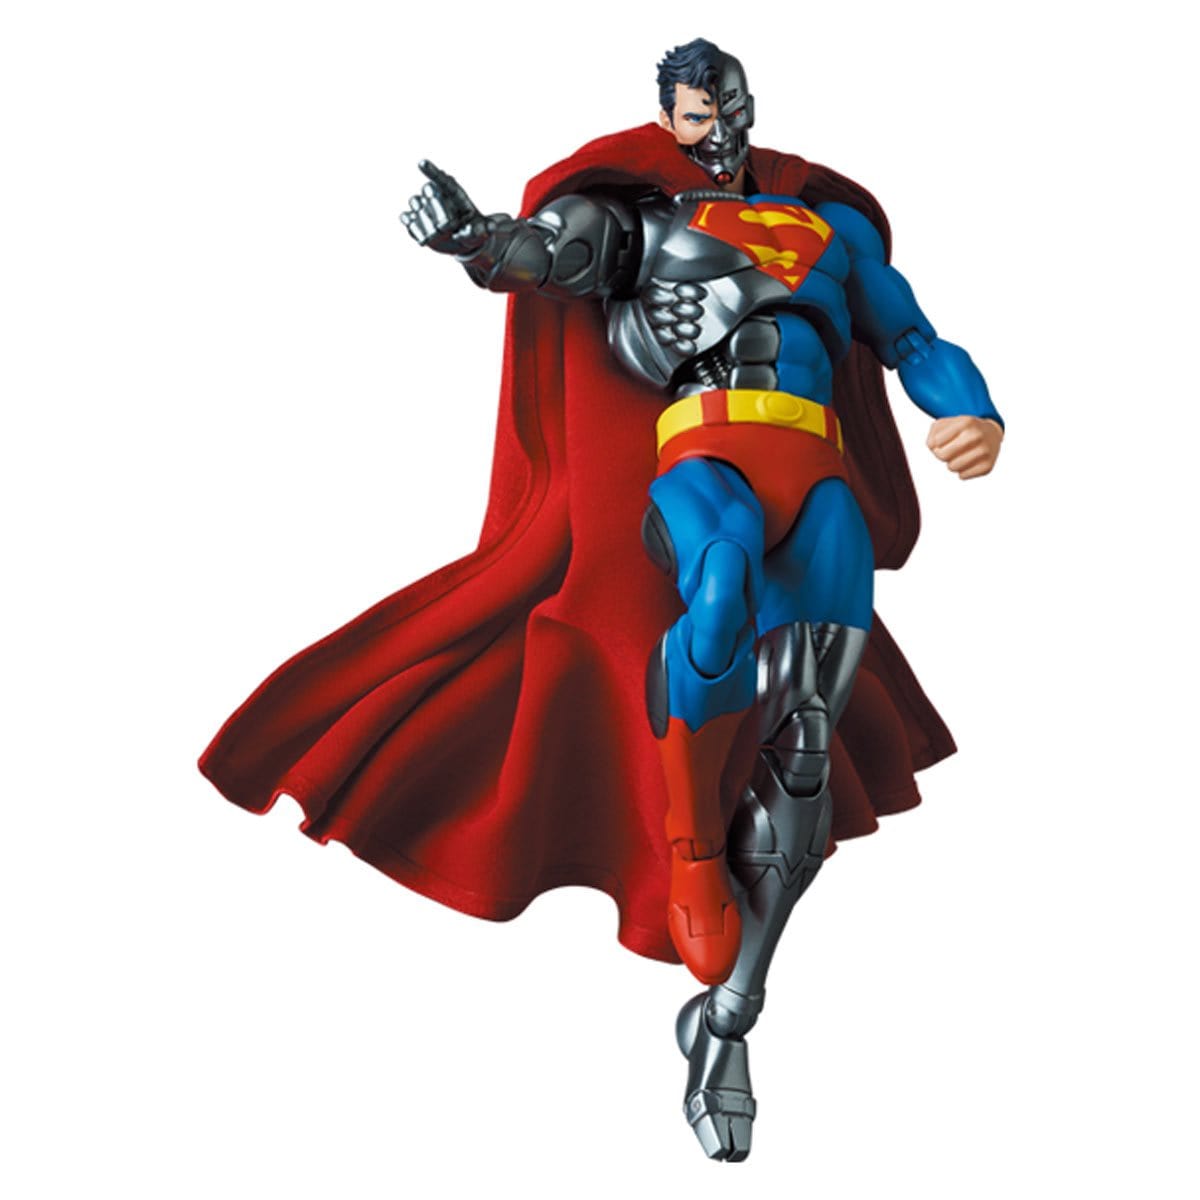 Medicom Toy MAFEX No. 164 The Return of Superman Cyborg Superman Action Figure